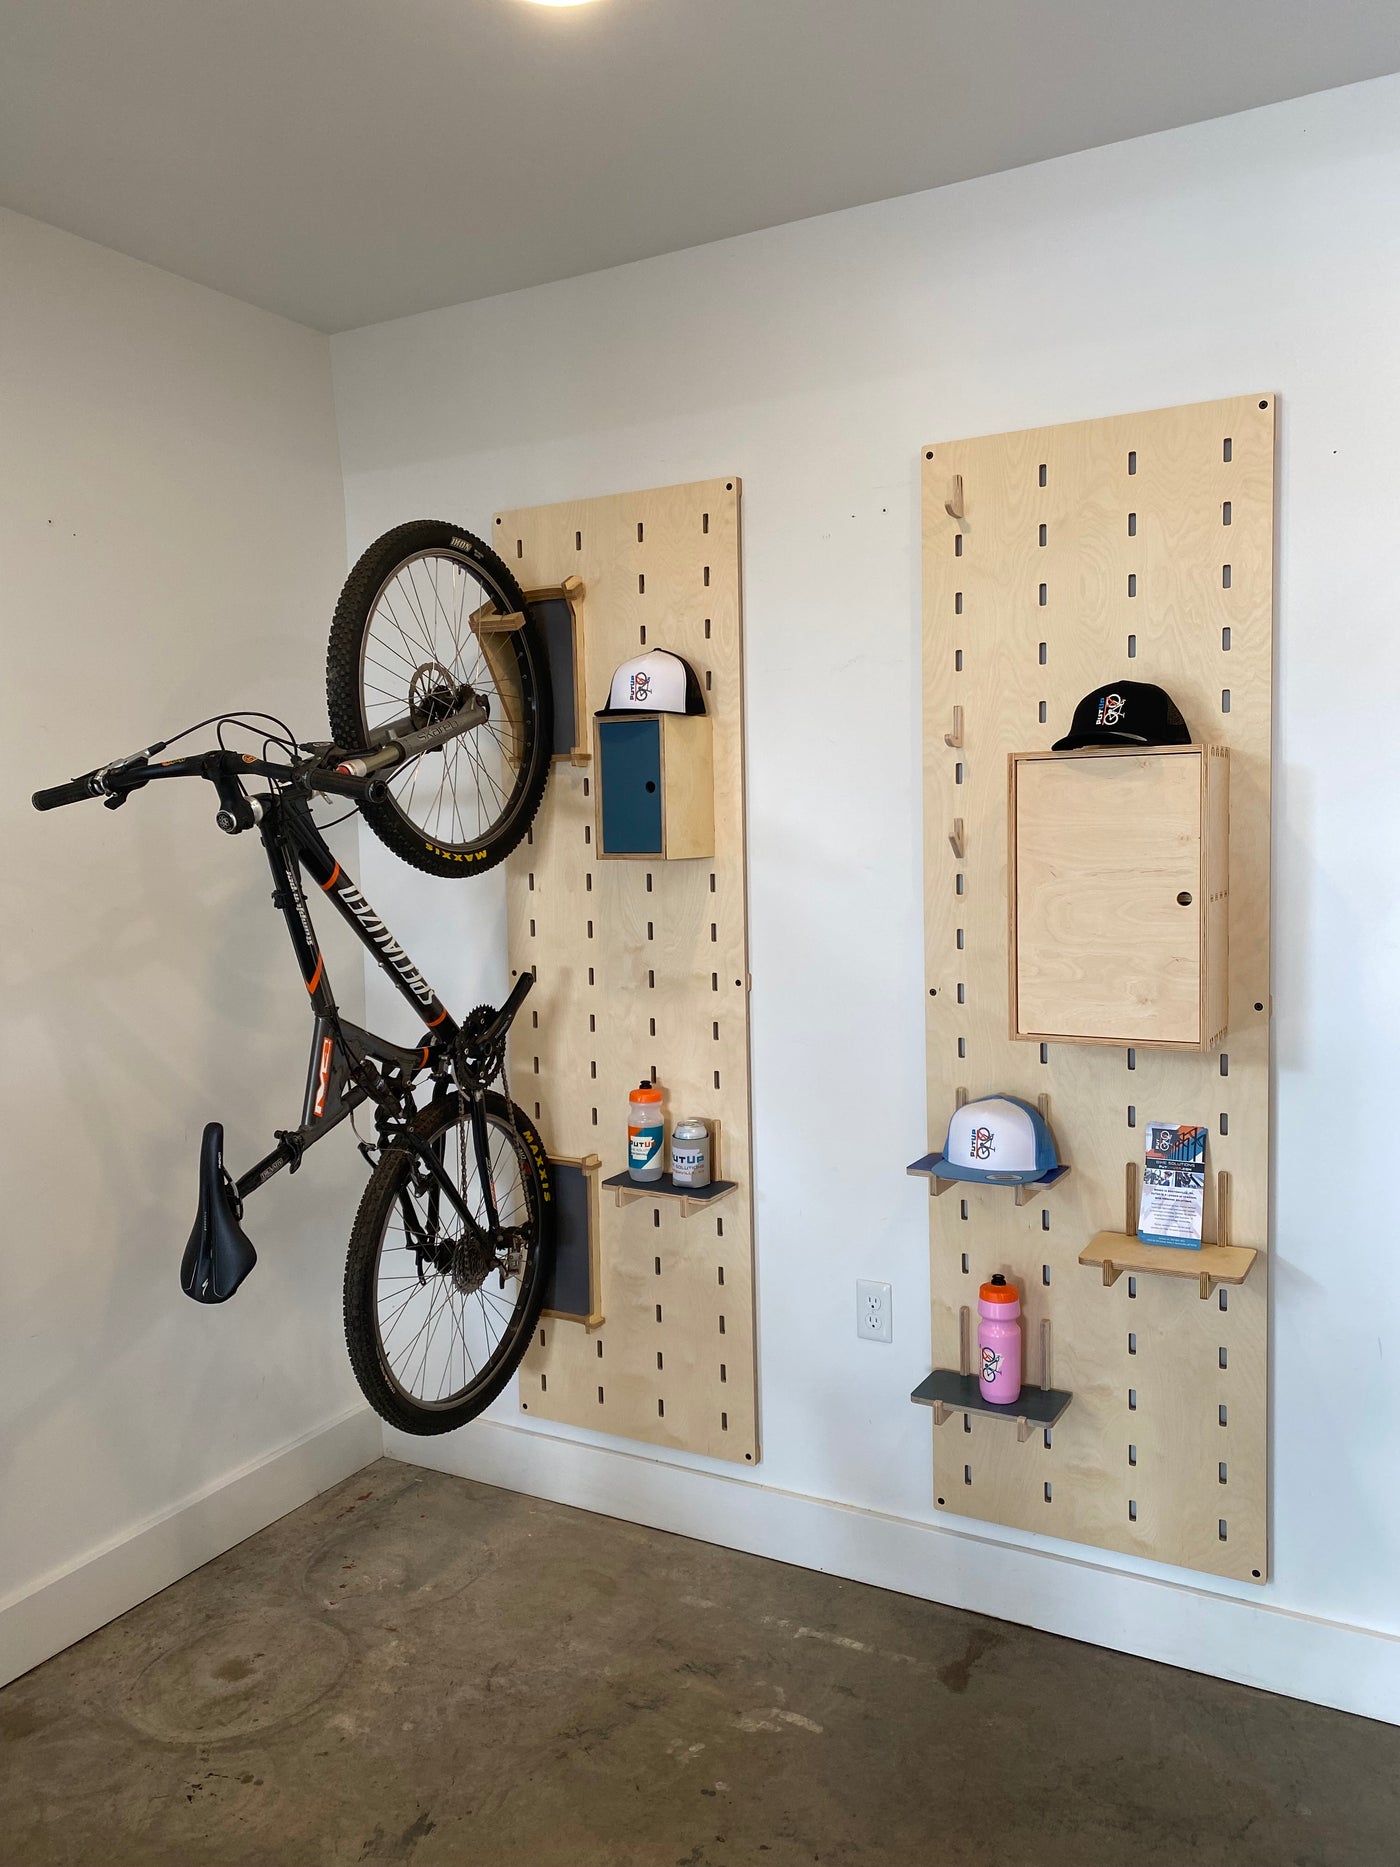 The Uplift – PutUp Bike Racks